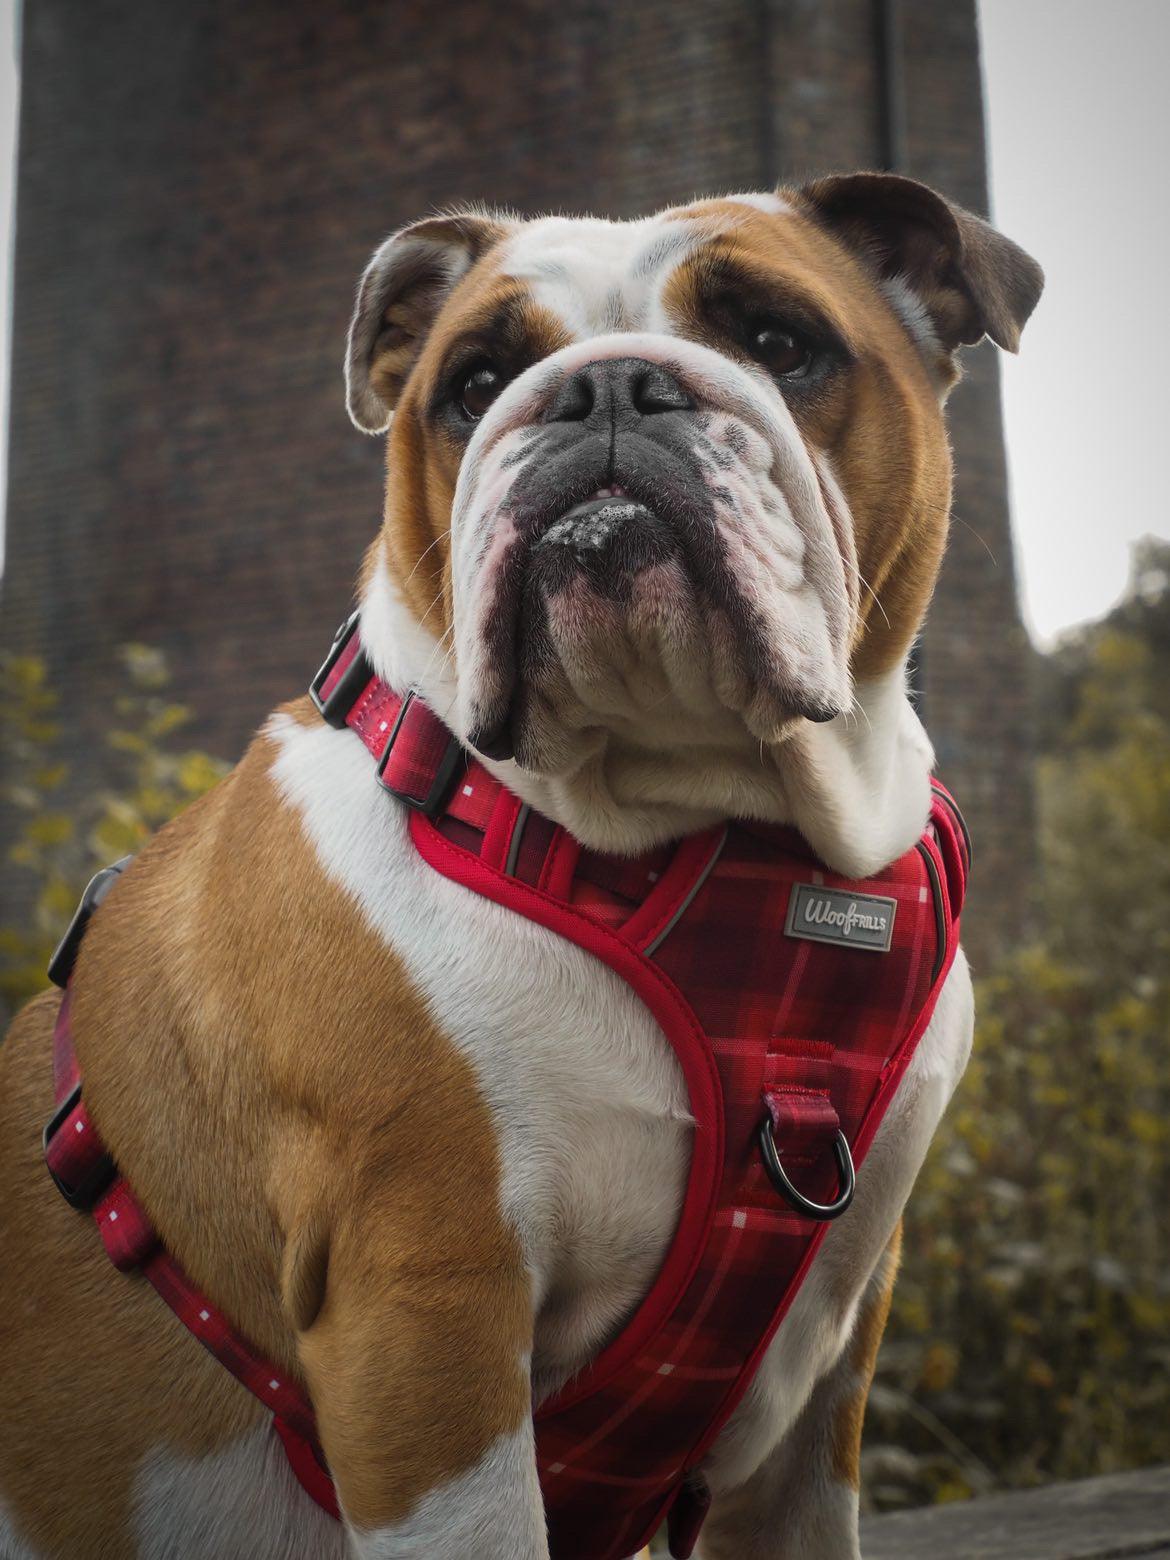 English bulldog wearing a red harness